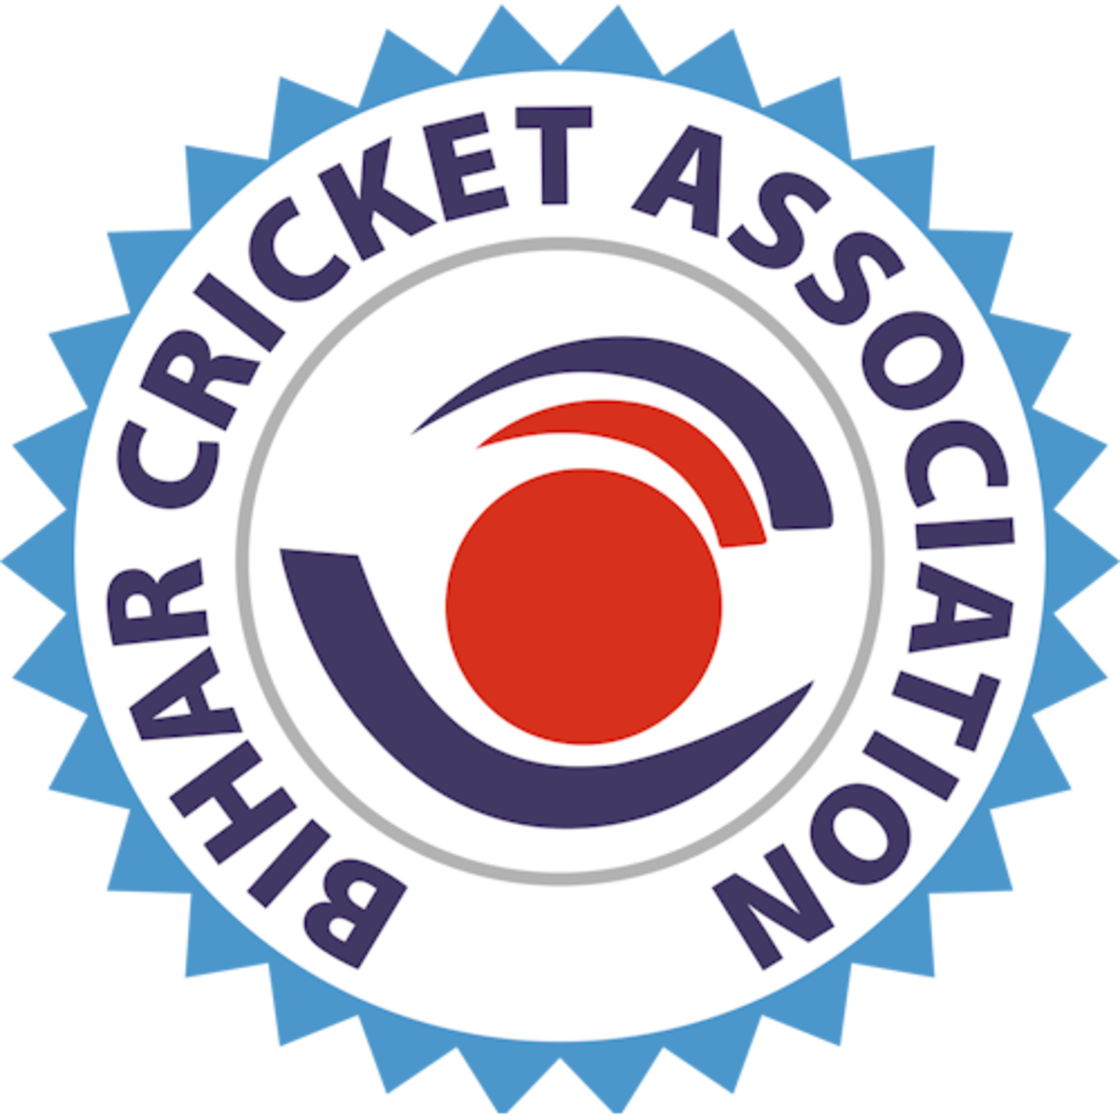 Bihar Cricket team logo